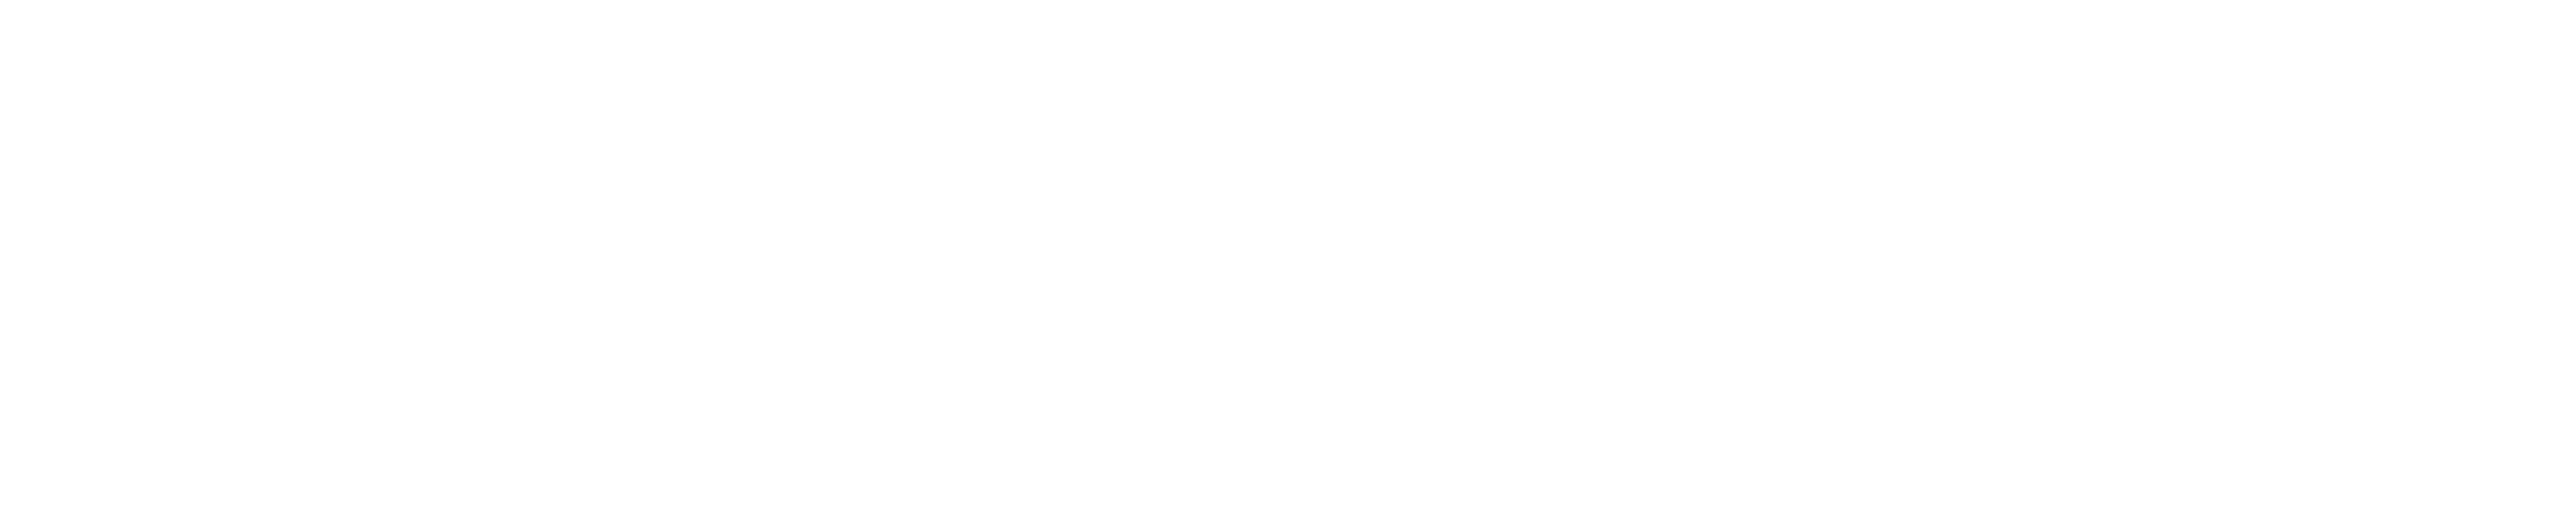 Hamburg2go logo